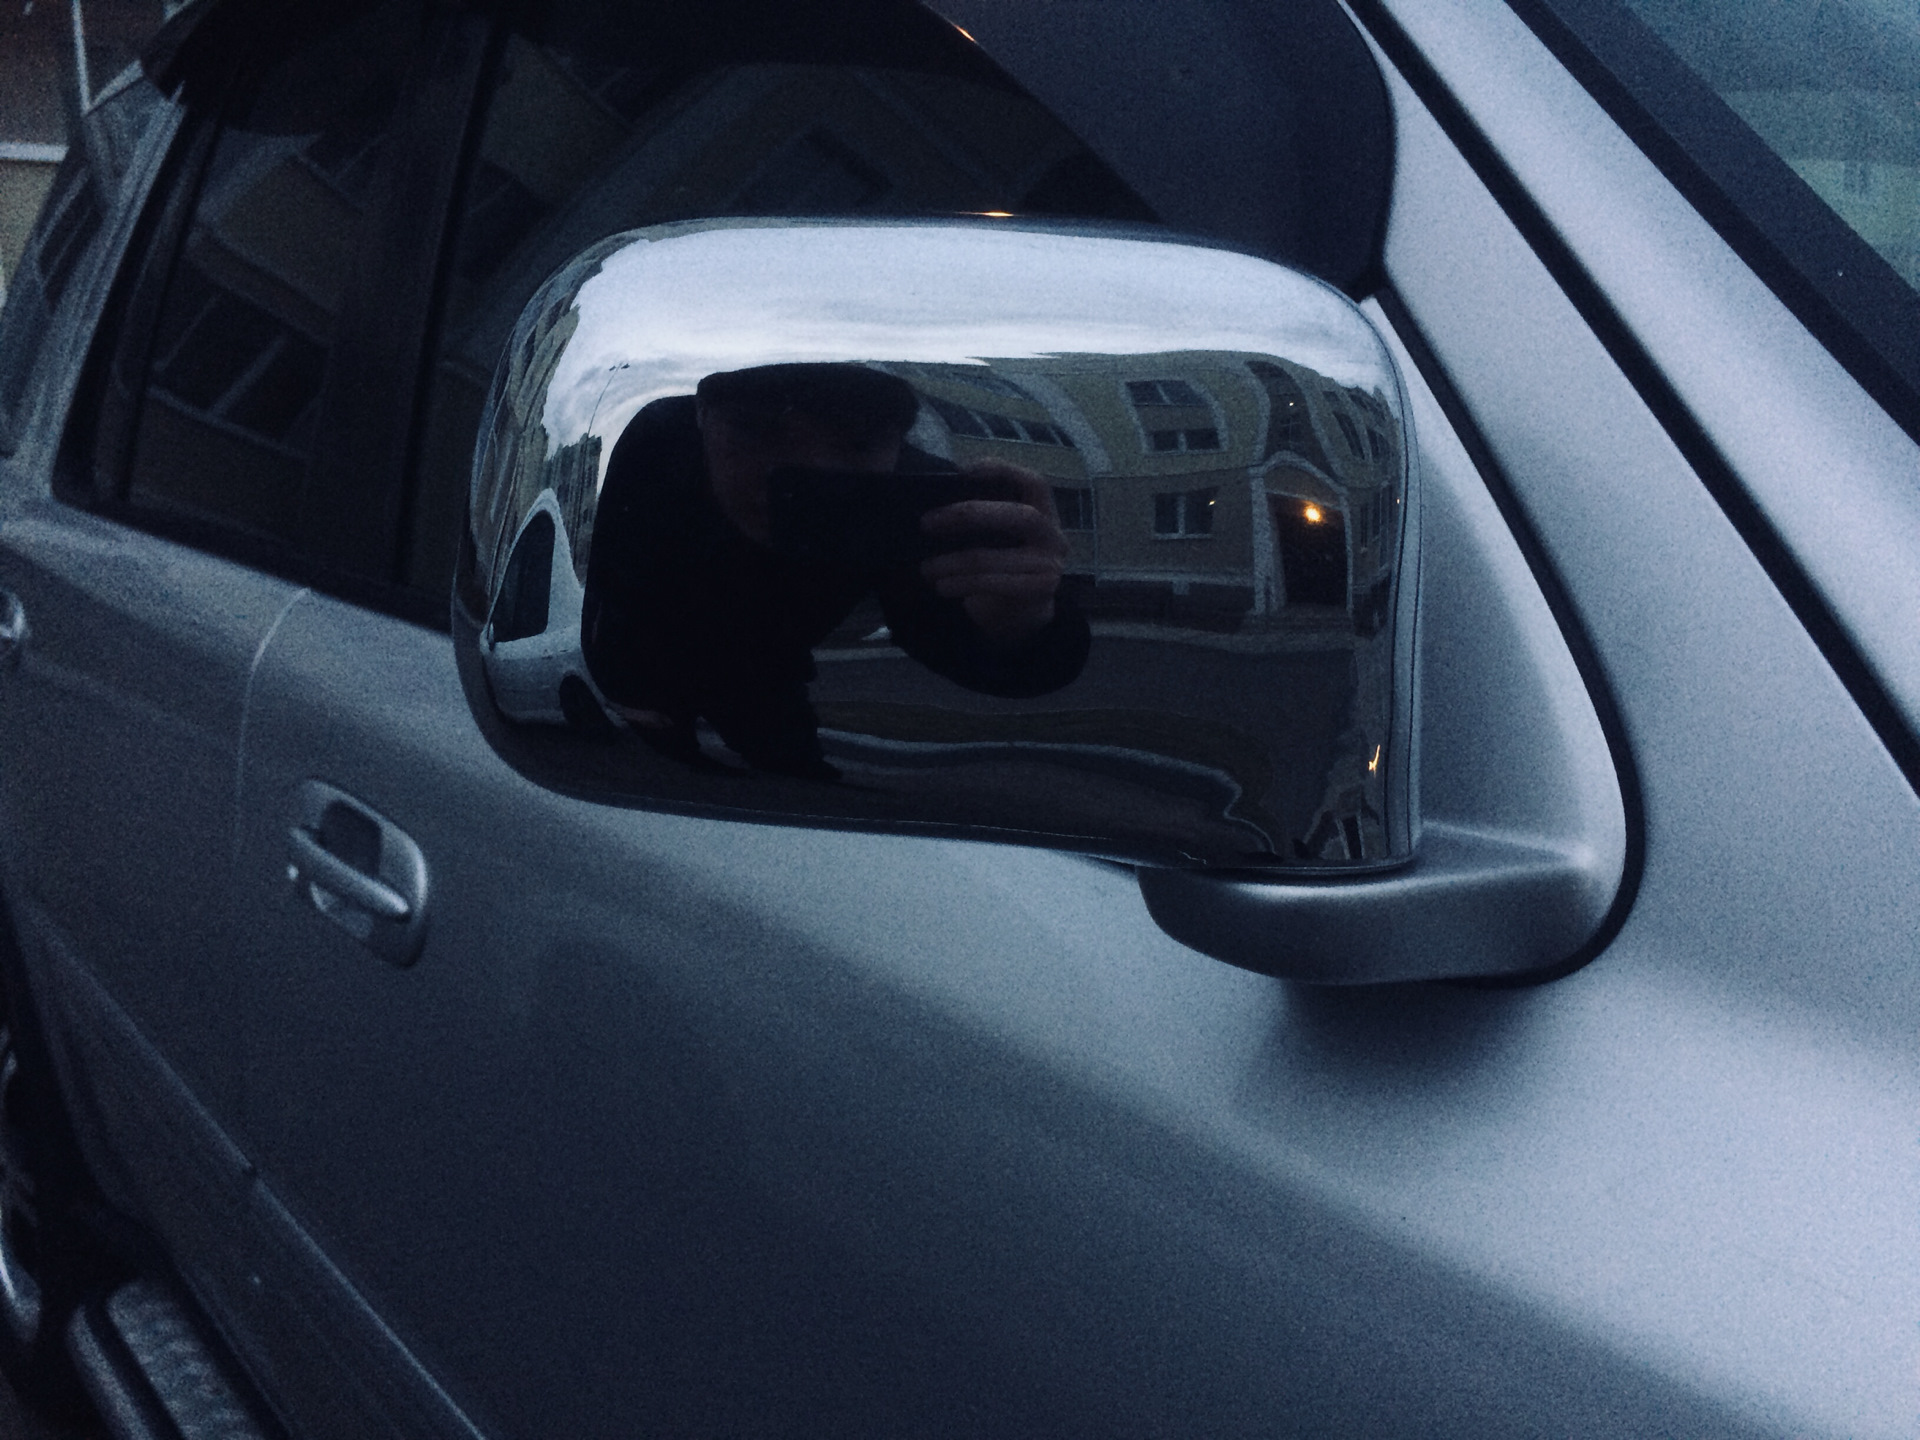 Honda v накладки. Хромированные накладки Honda CRV rd1. Боковое зеркало на Honda CR-V 2008 года чёрного цвета. Зеркала с повторителями CRV rd1. Накладки на зеркала для Хонда ЦРВ рд1.